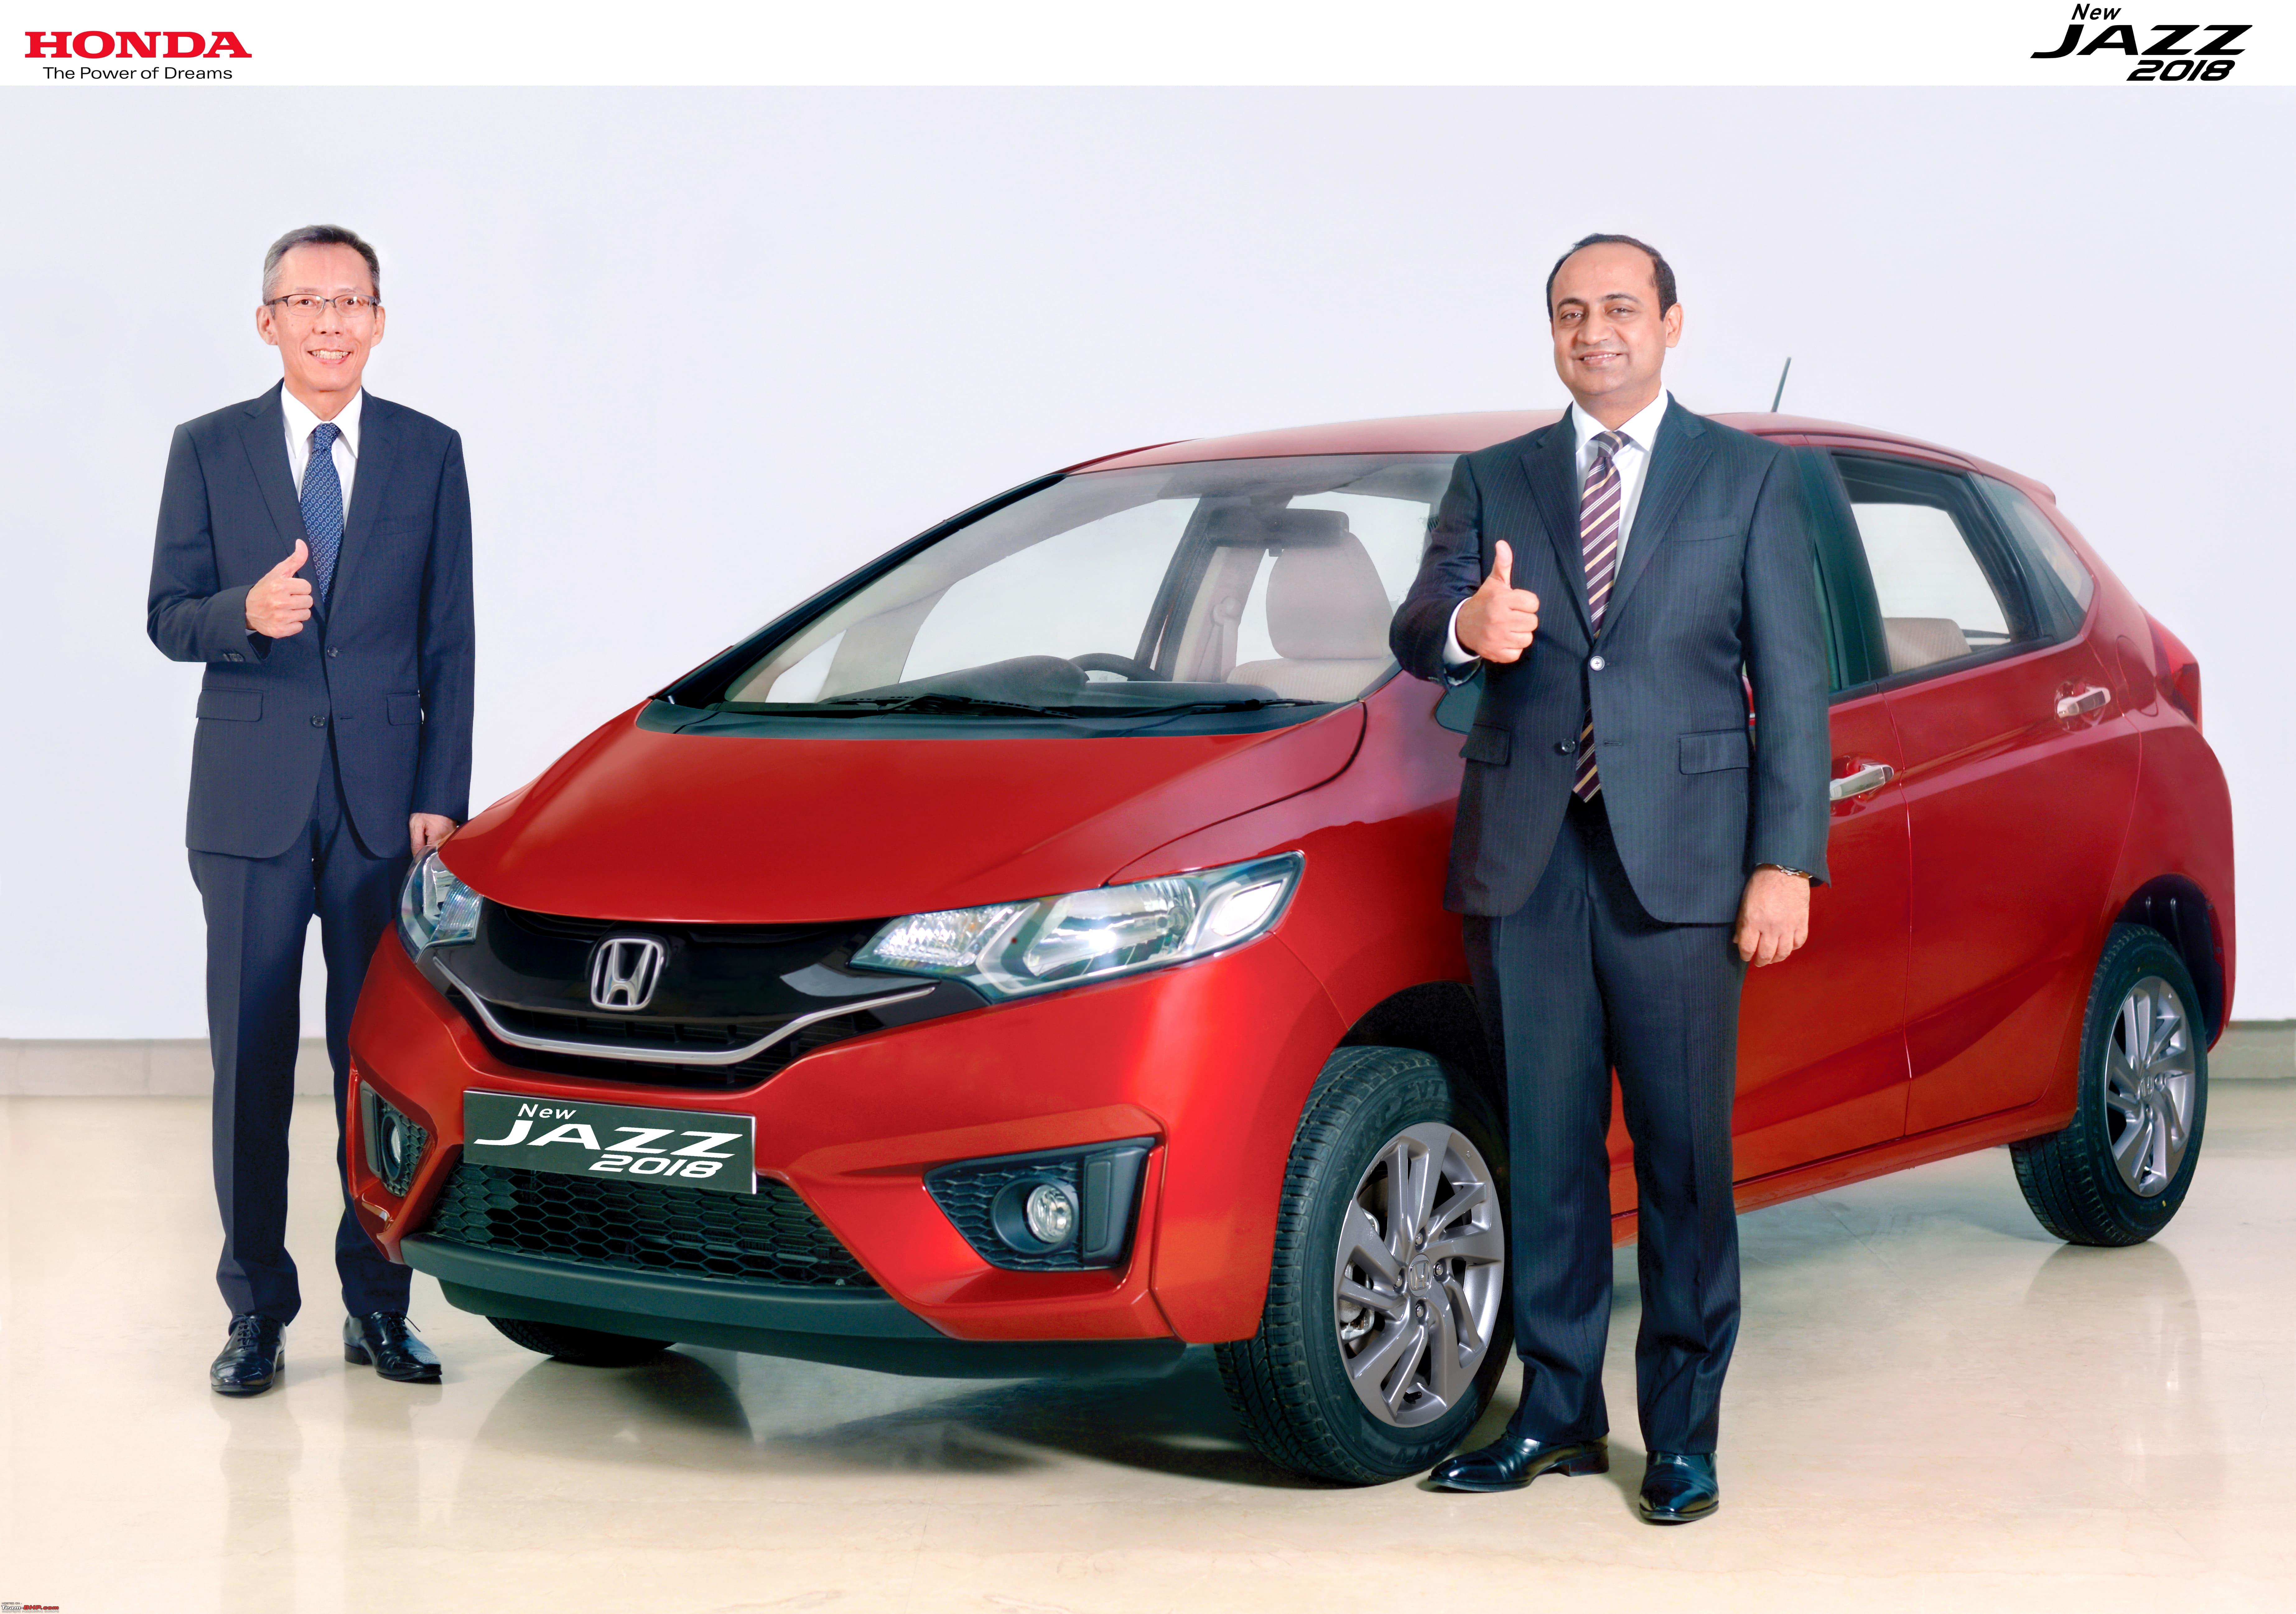 2018 Honda Jazz launched at Rs. 7.35 lakh - Team-BHP